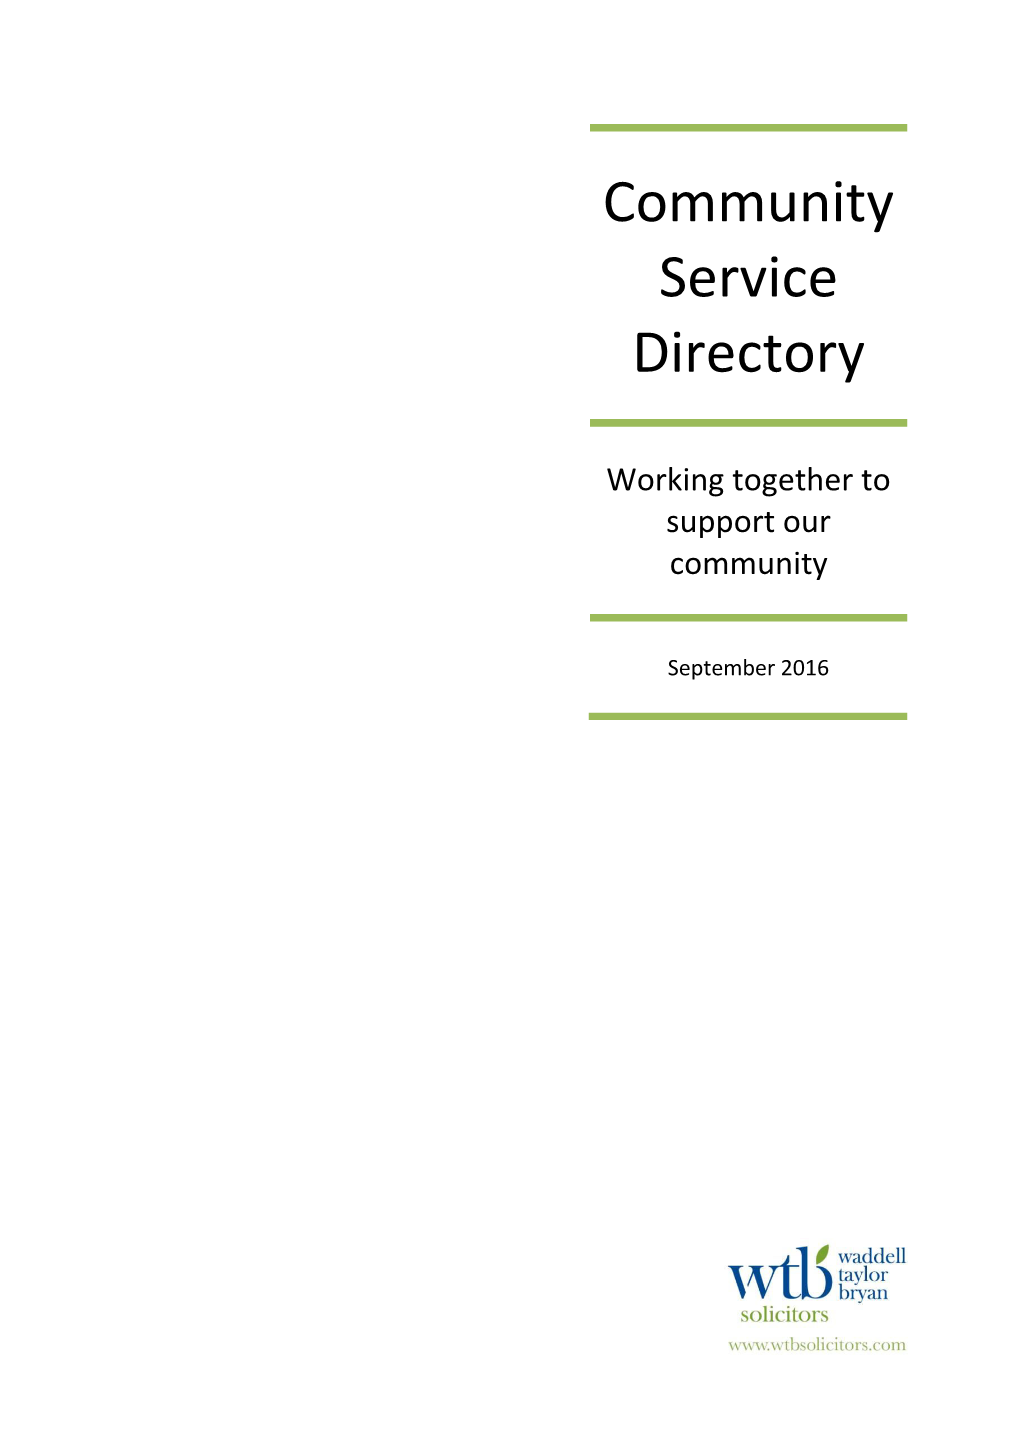 Community Service Directory